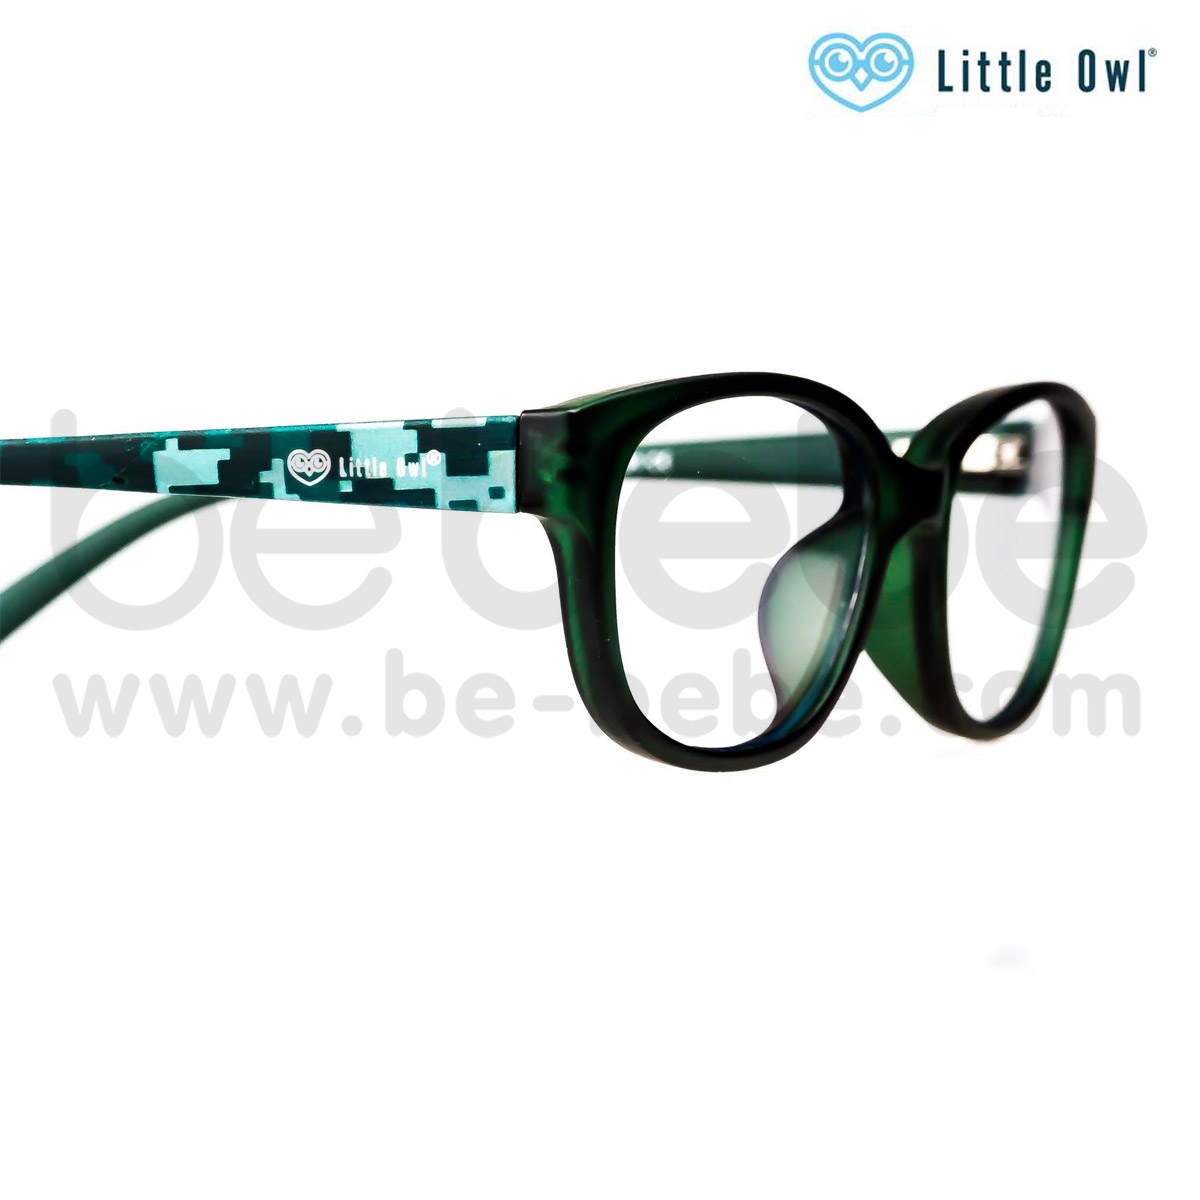 Little Owl : แว่นกรองแสงสีฟ้า / เขียว